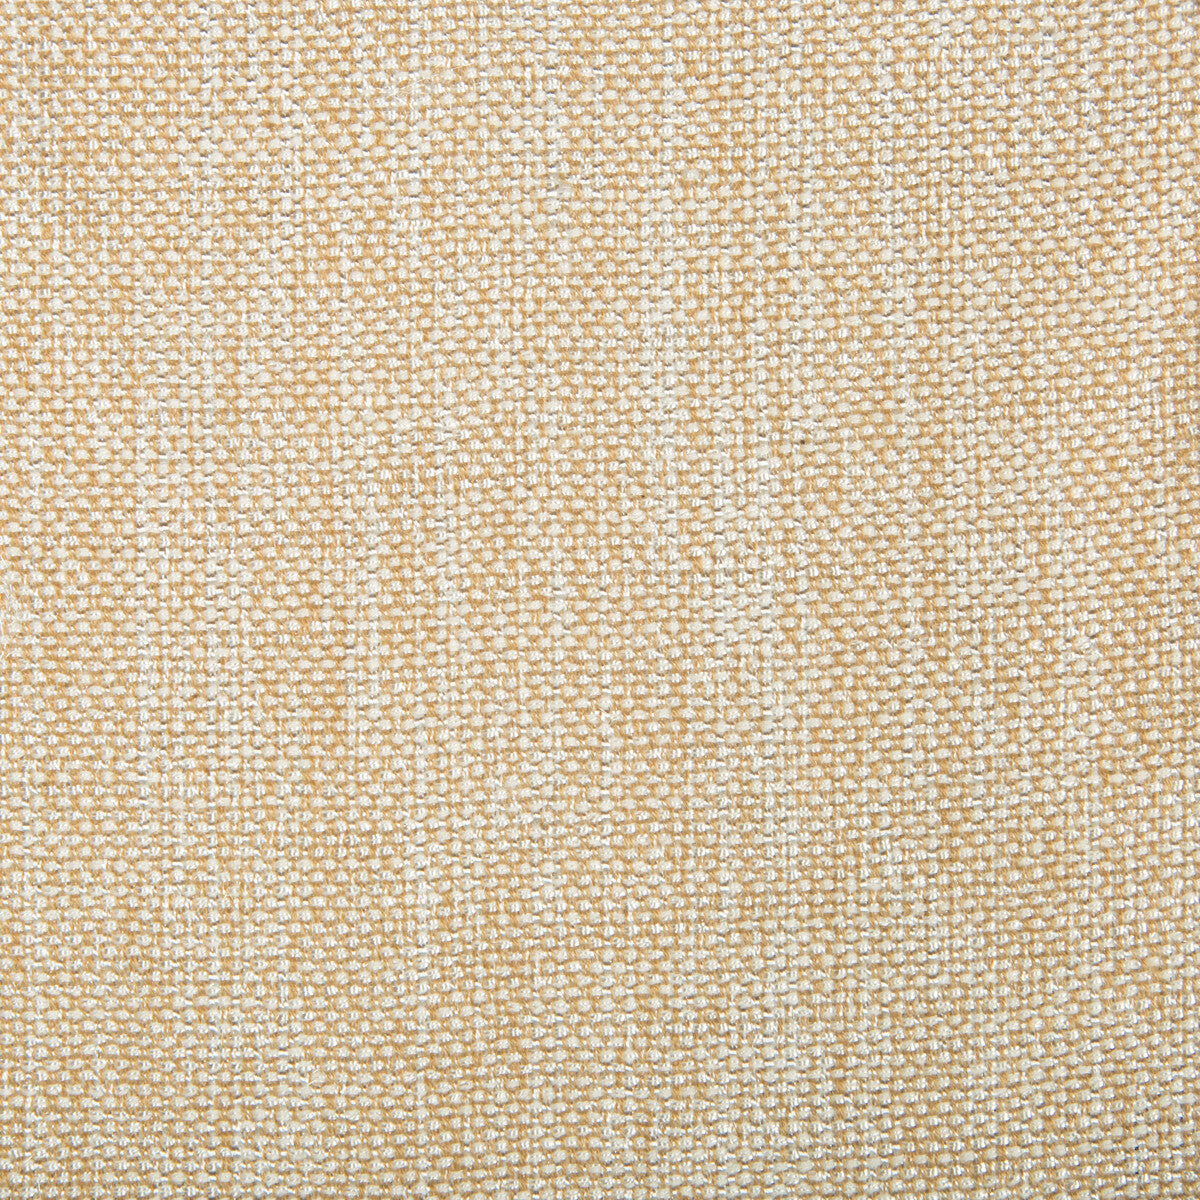 Kravet Smart fabric in 34939-1601 color - pattern 34939.1601.0 - by Kravet Smart